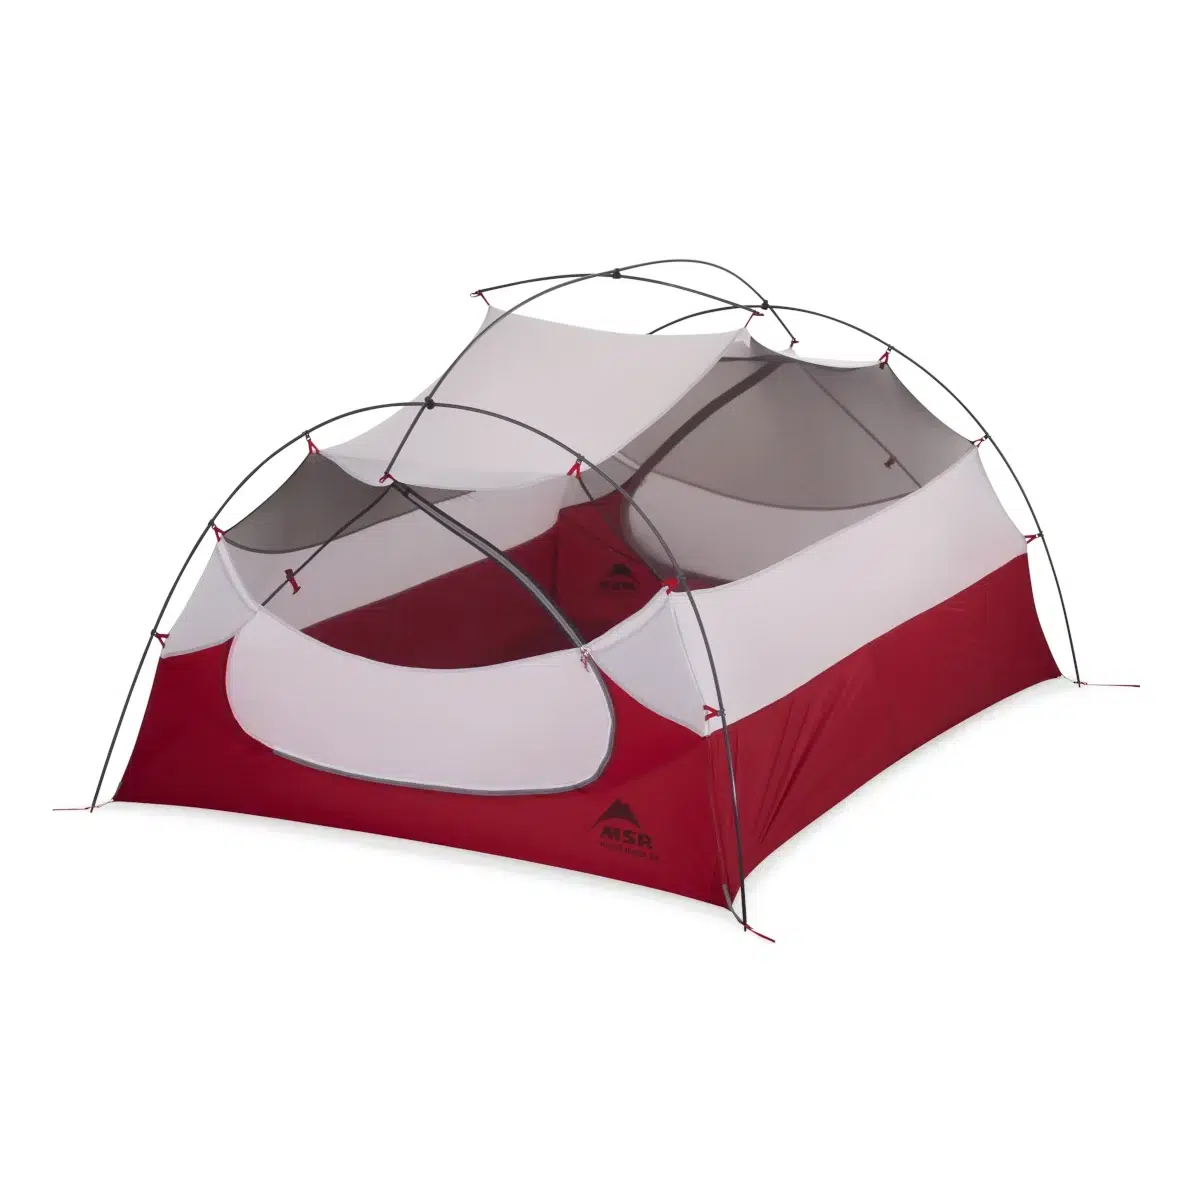 MSR Mutha Hubba-camping tent